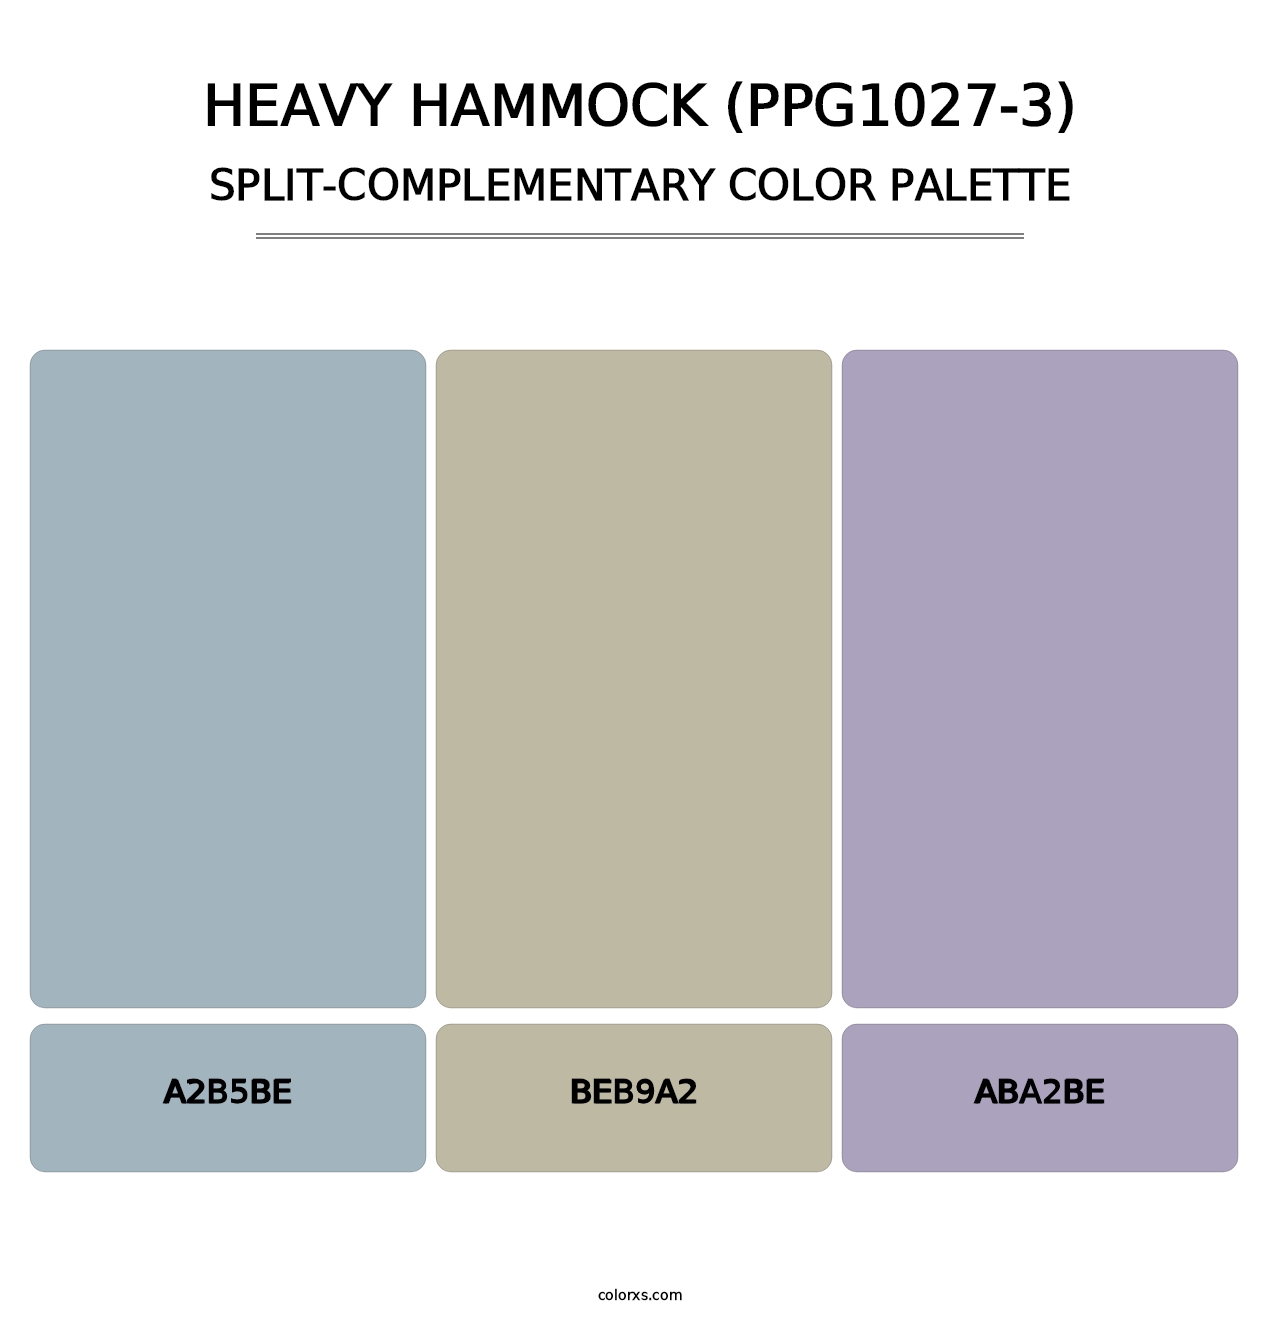 Heavy Hammock (PPG1027-3) - Split-Complementary Color Palette